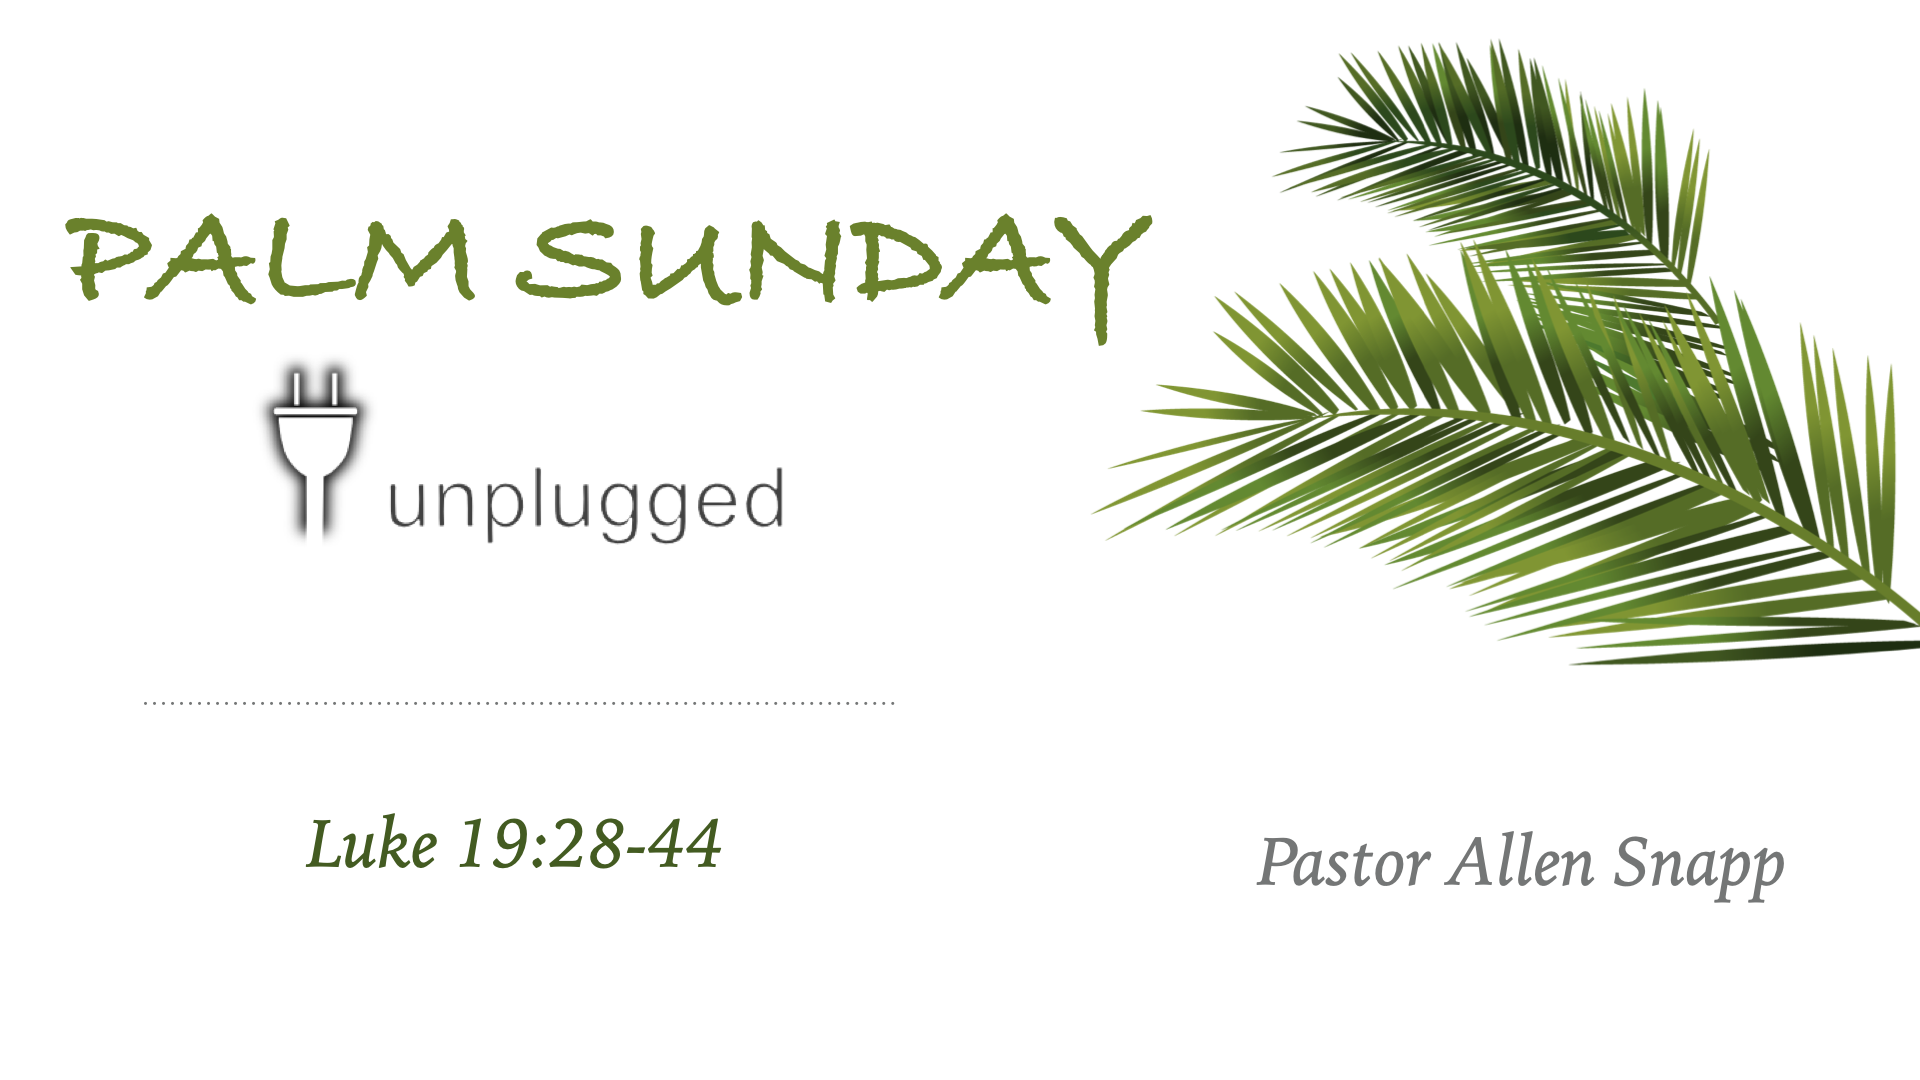 Palm Sunday Unplugged banner